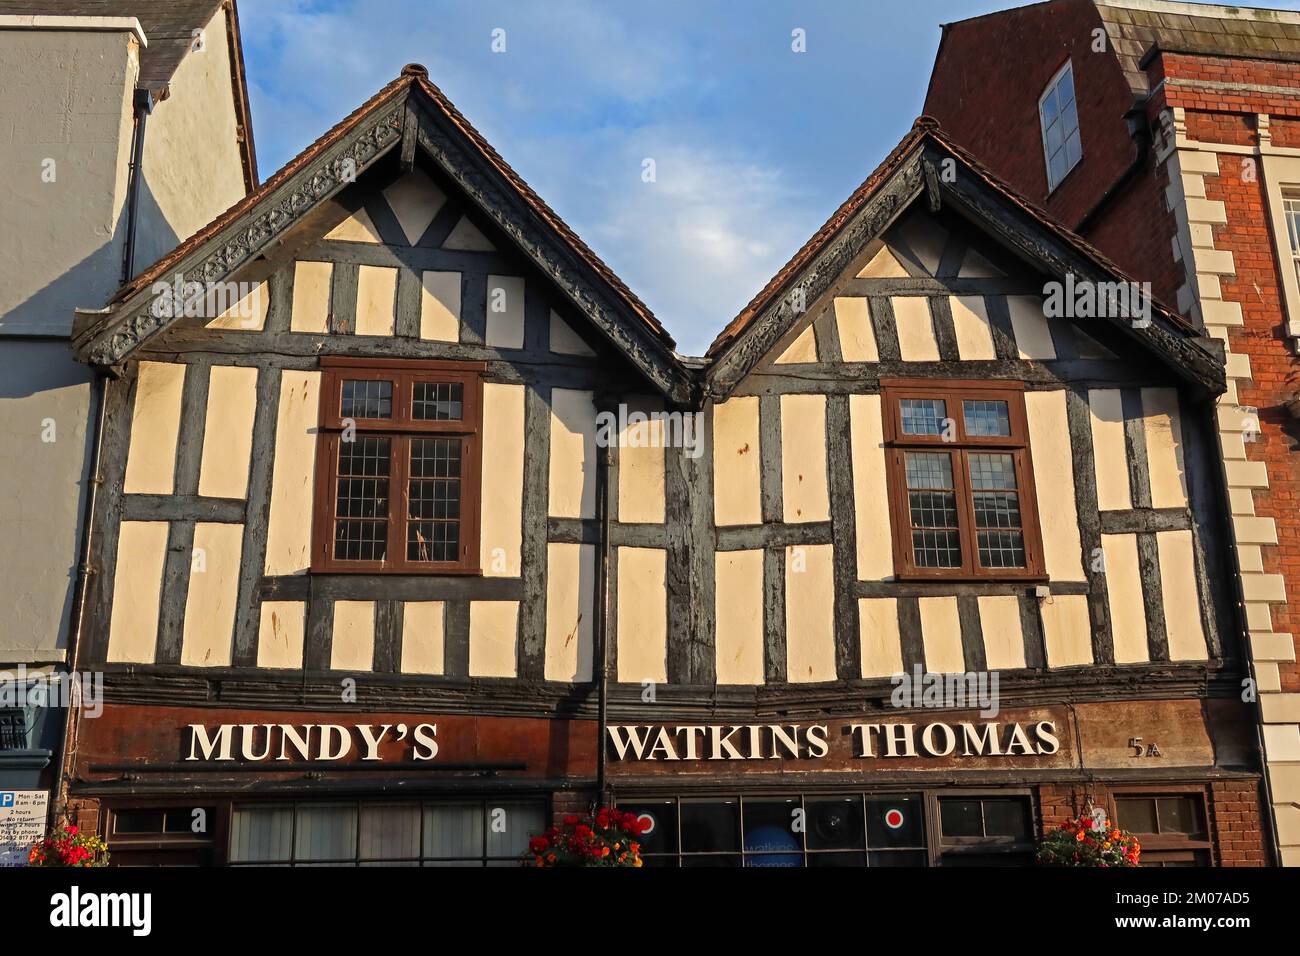 Mundys, Watkins Thomas, timberframe shops Stock Photo